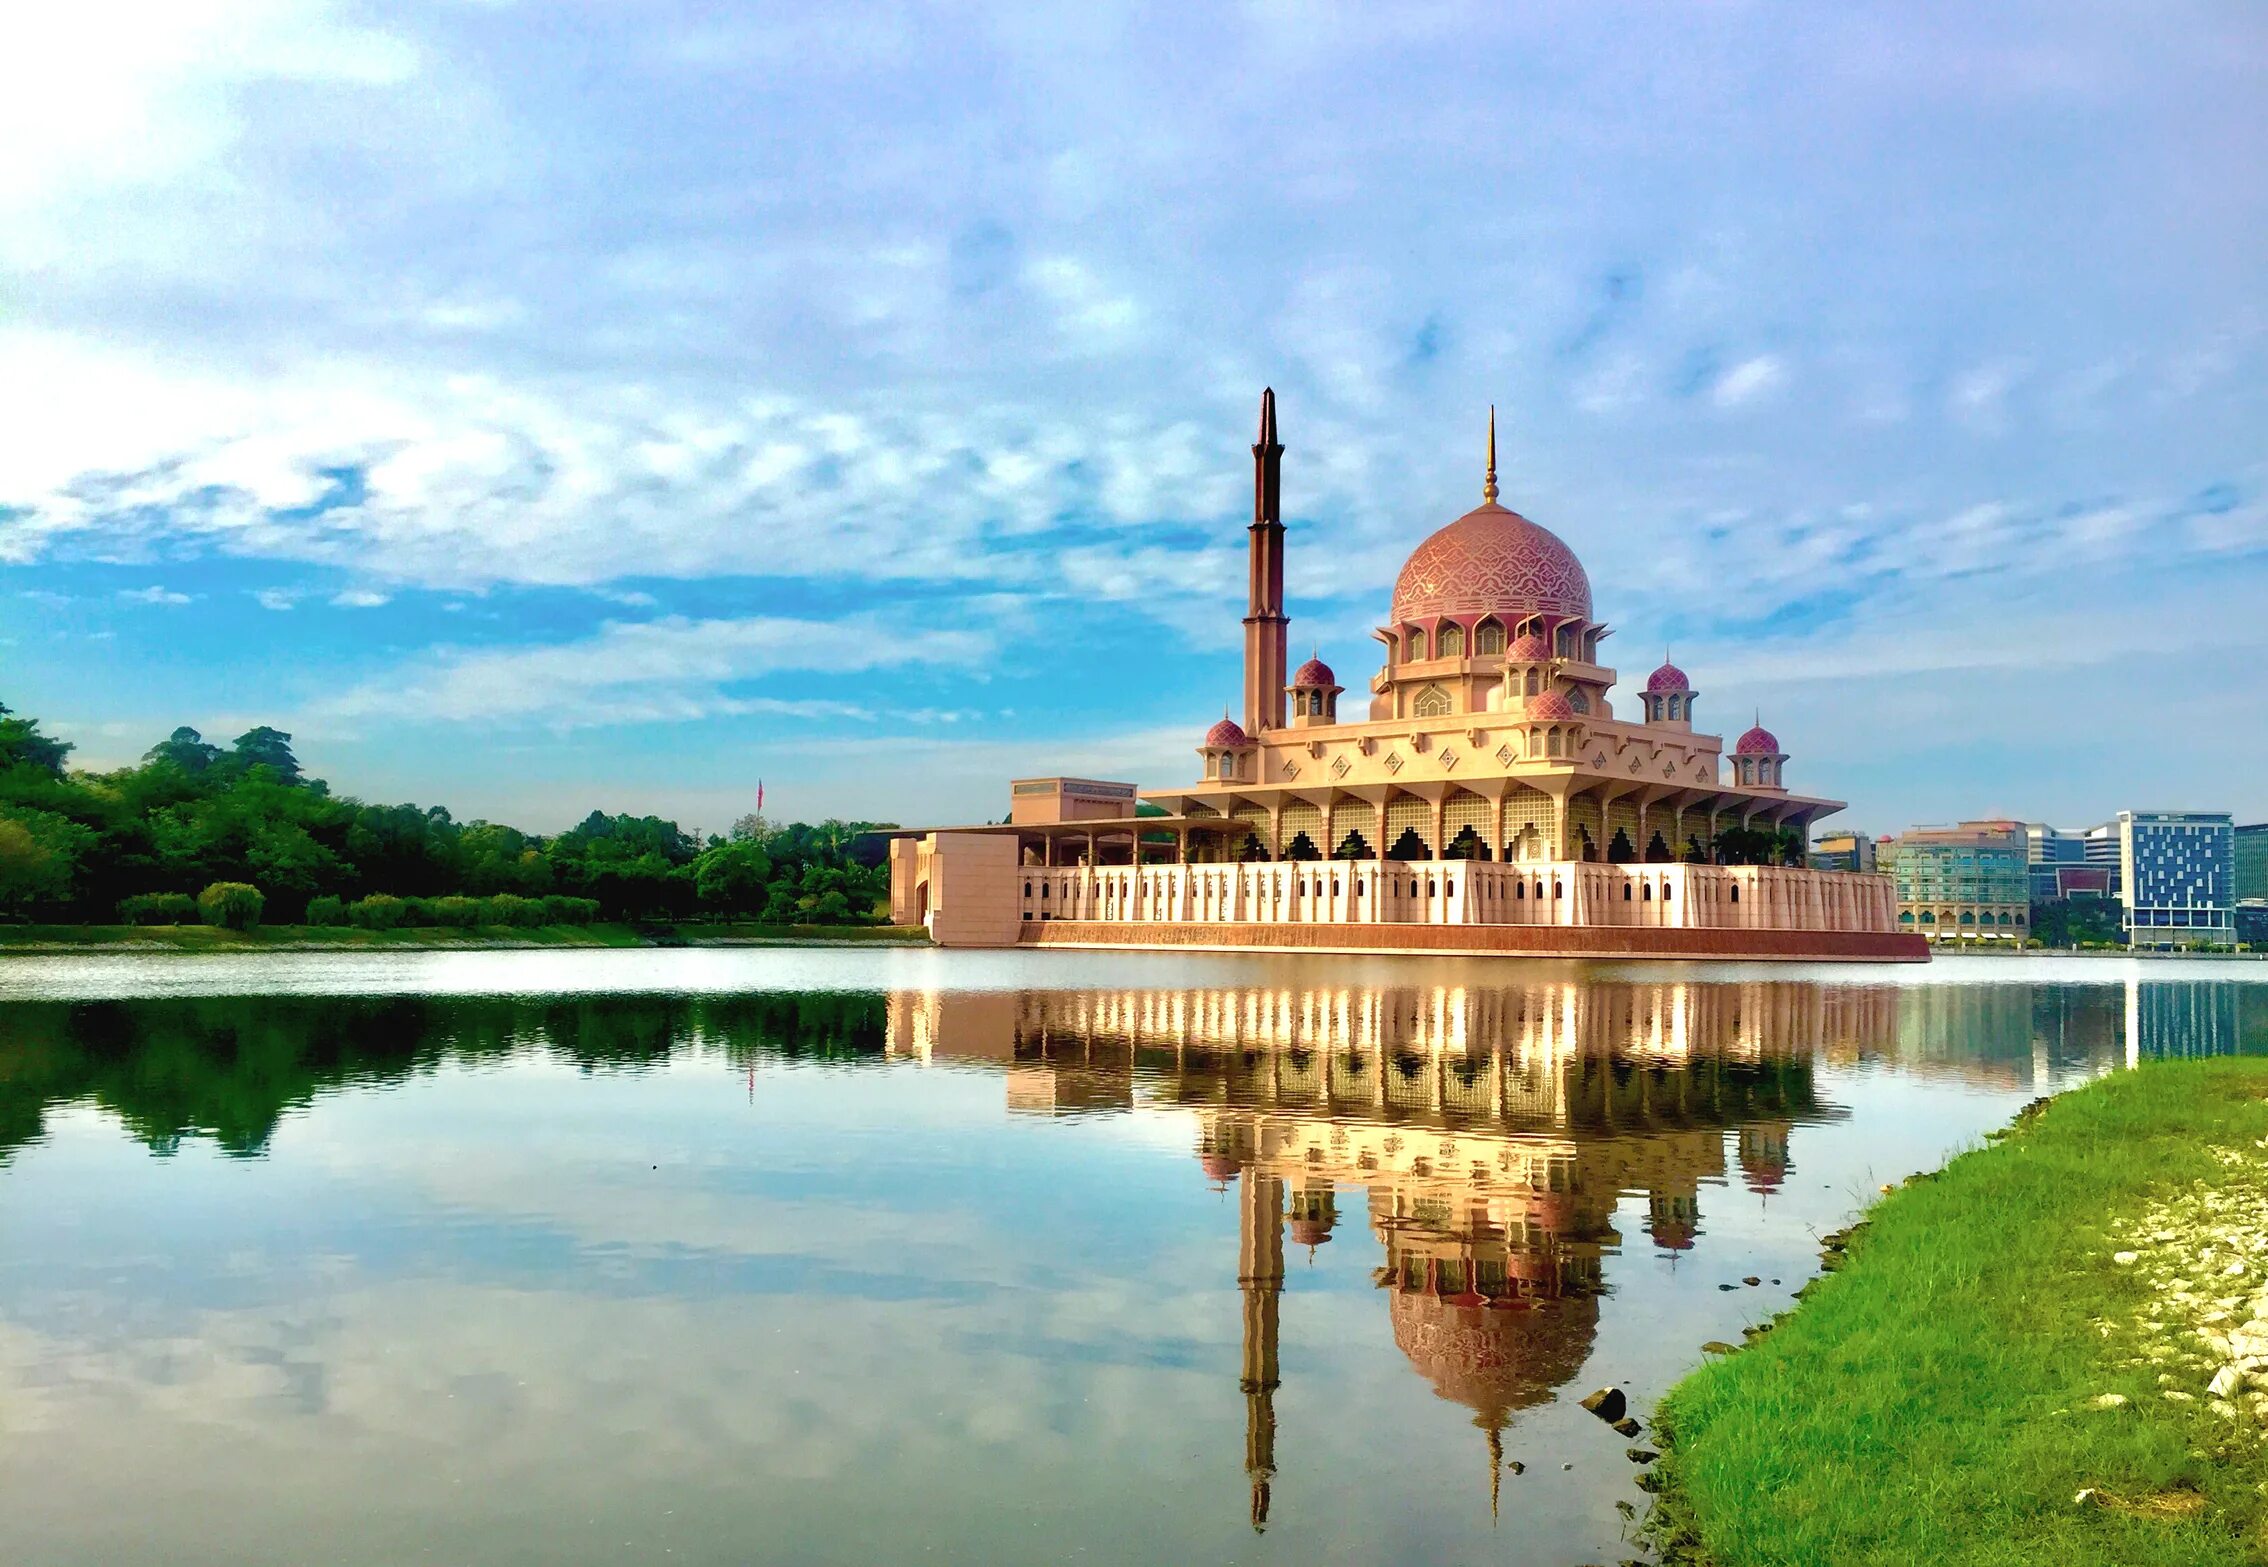 Unique landmarks. Путраджайя Малайзия. Мечеть Путраджайя. Путраджая Куала Лумпур. Путраджайя розовая мечеть.